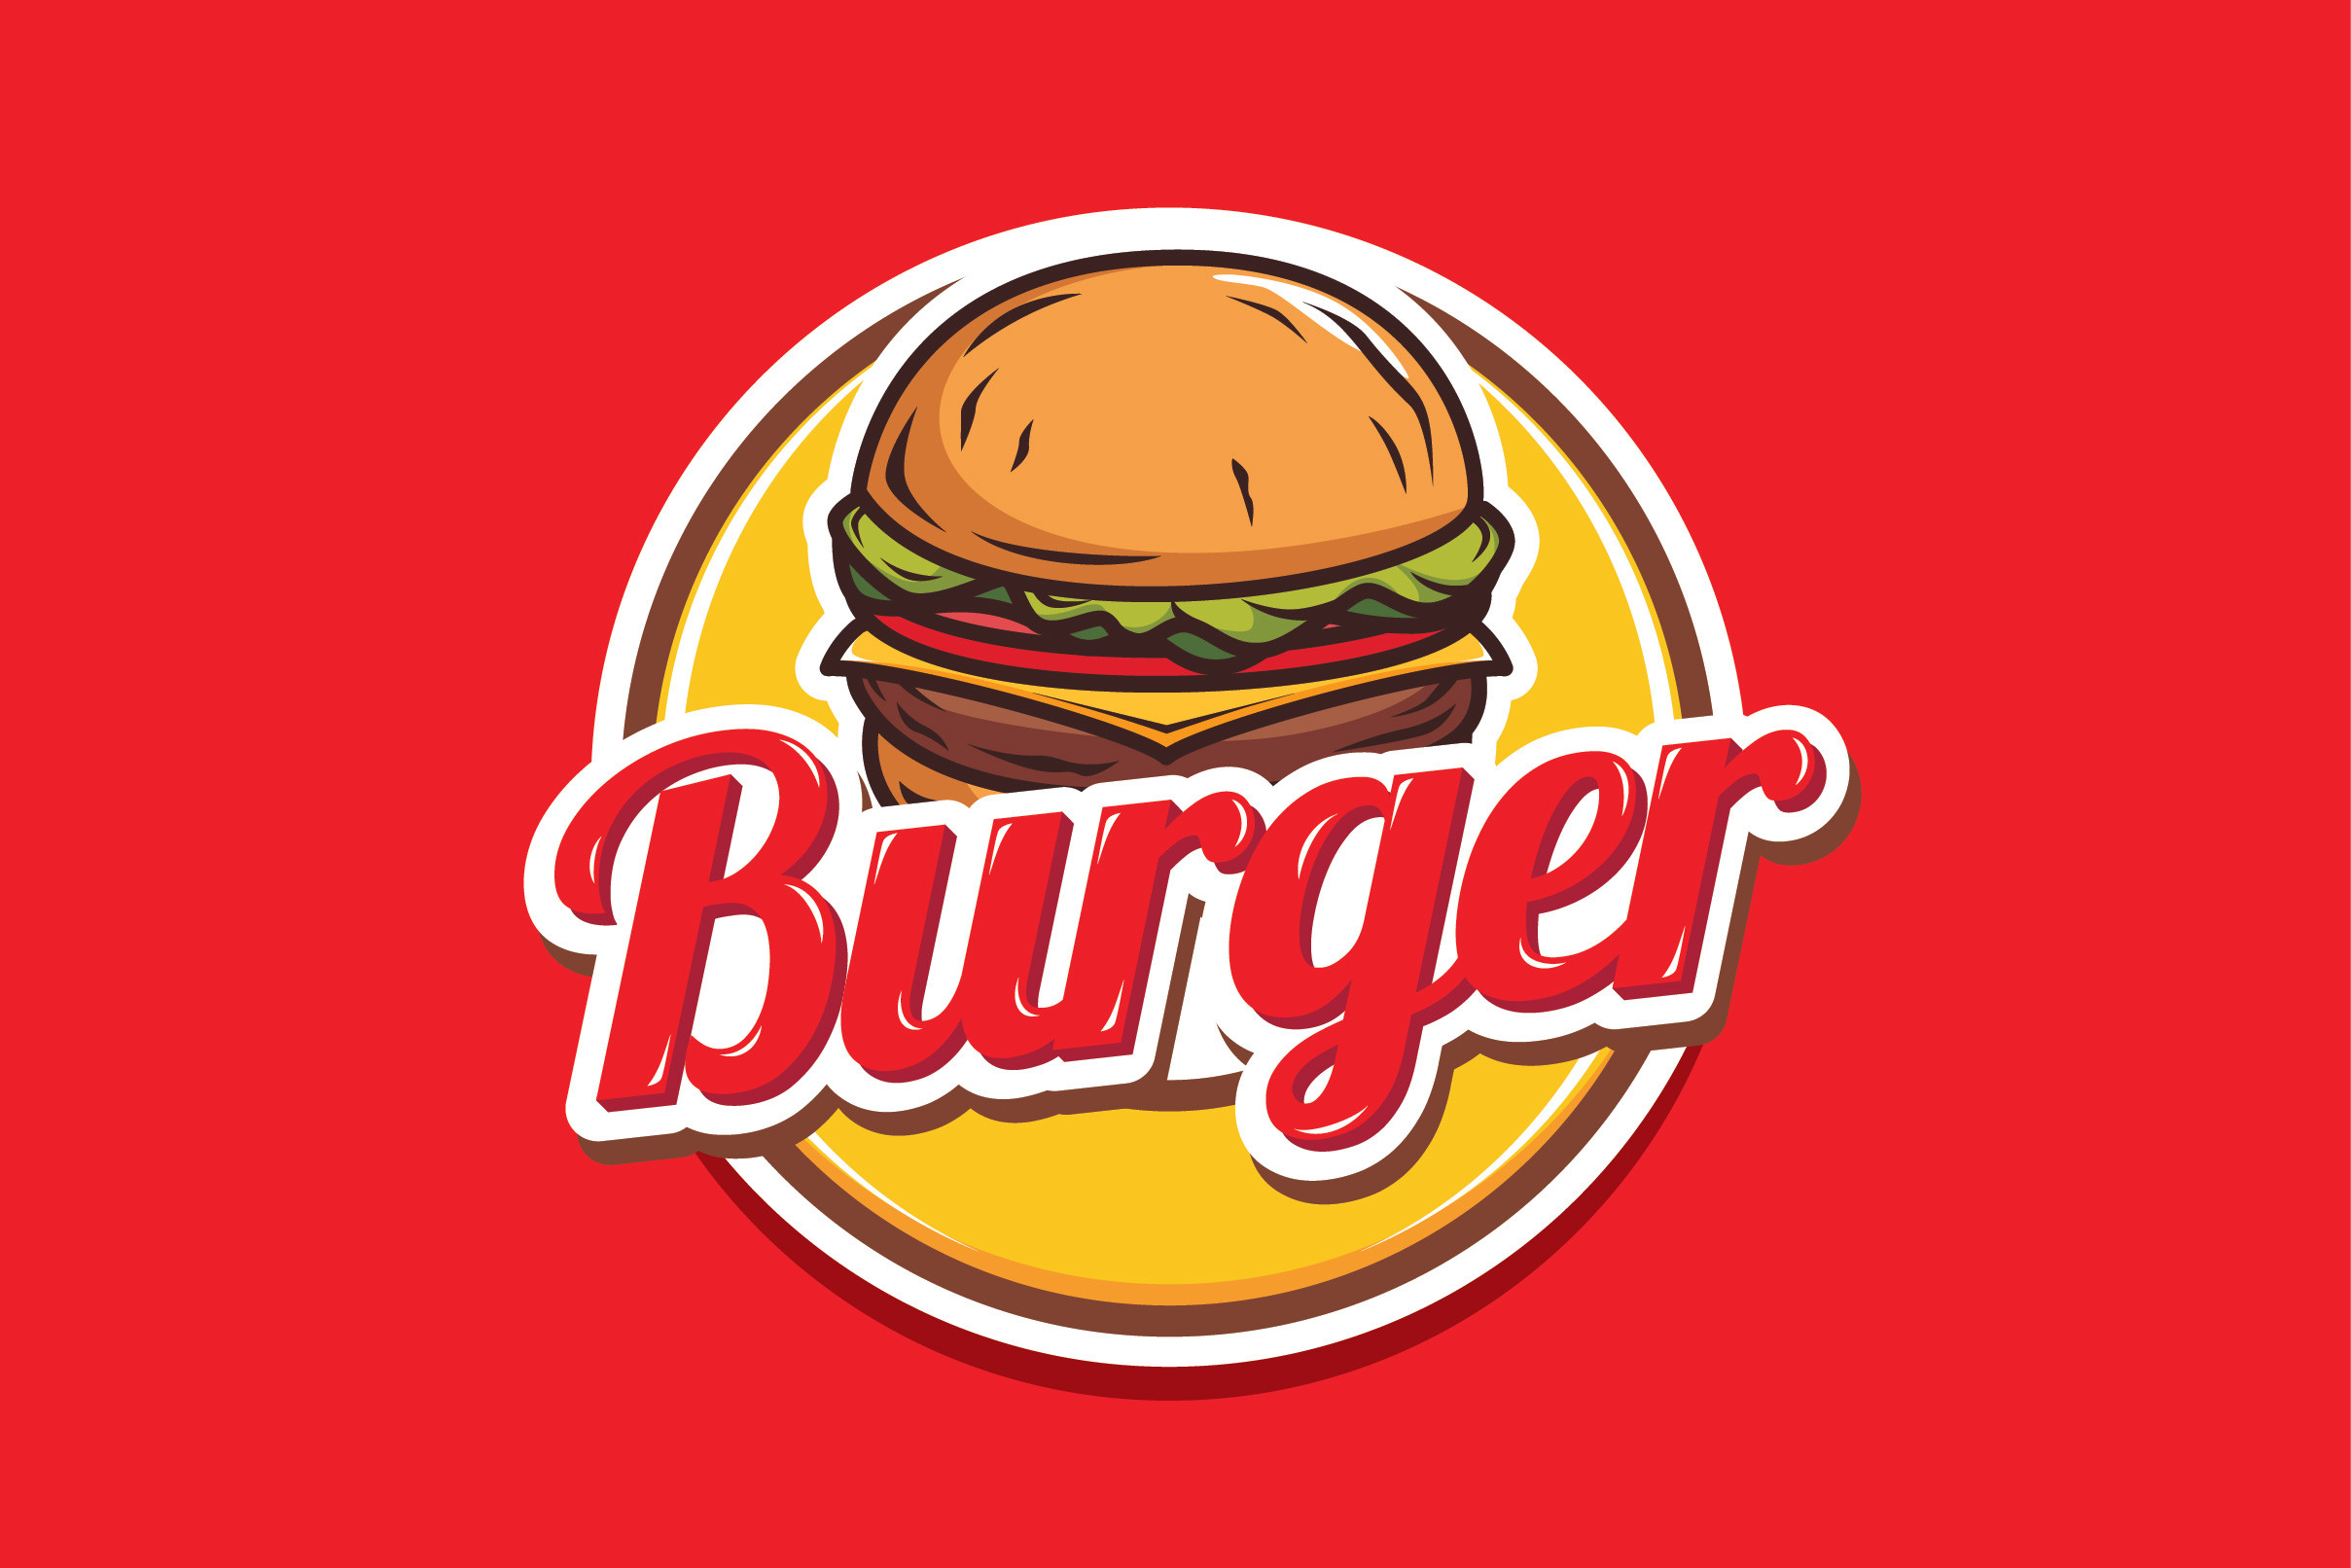 Burger Logo Design Graphic by nuranitalutfiana92 · Creative Fabrica